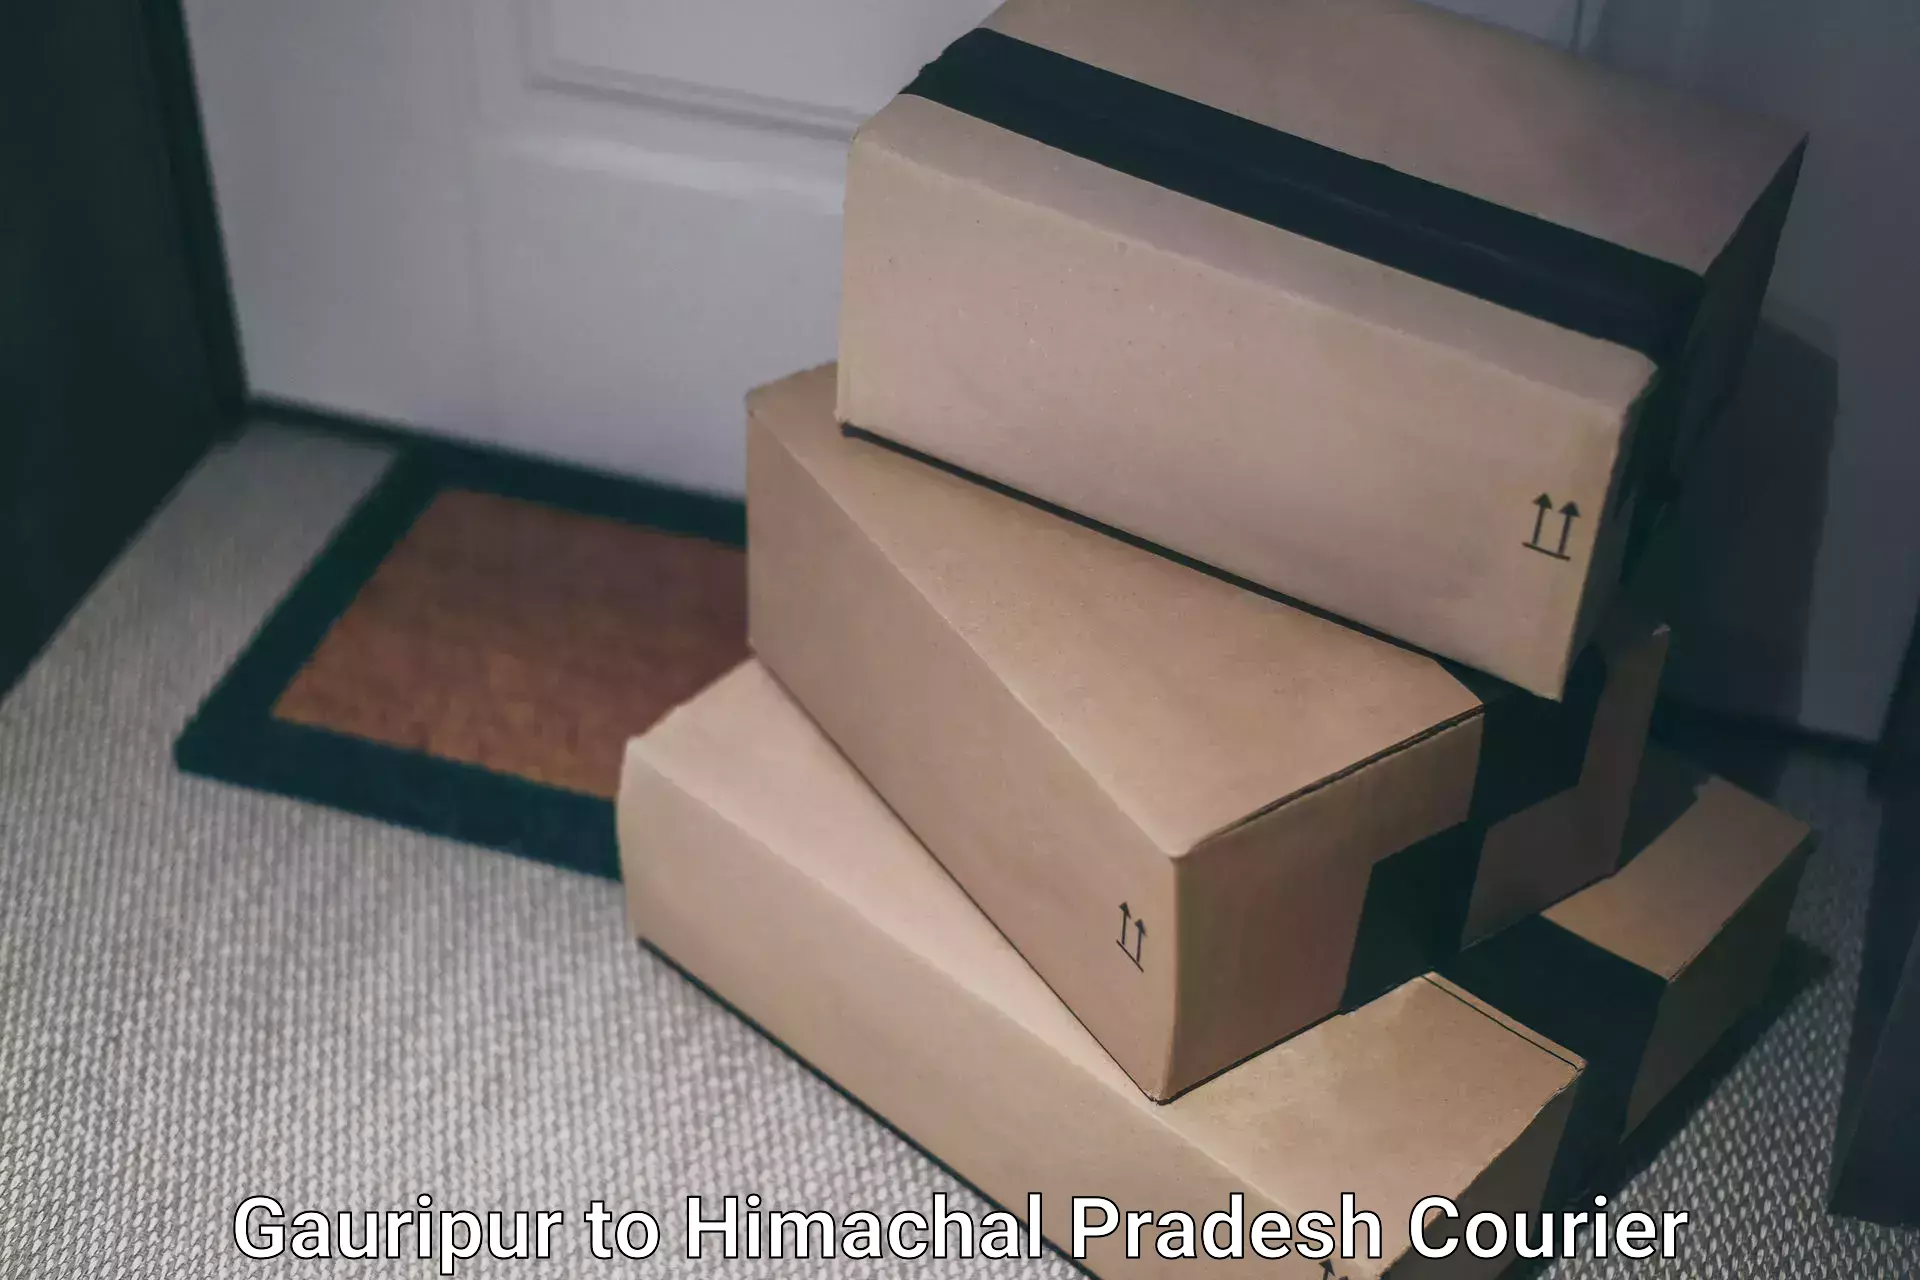 International parcel service Gauripur to Himachal Pradesh